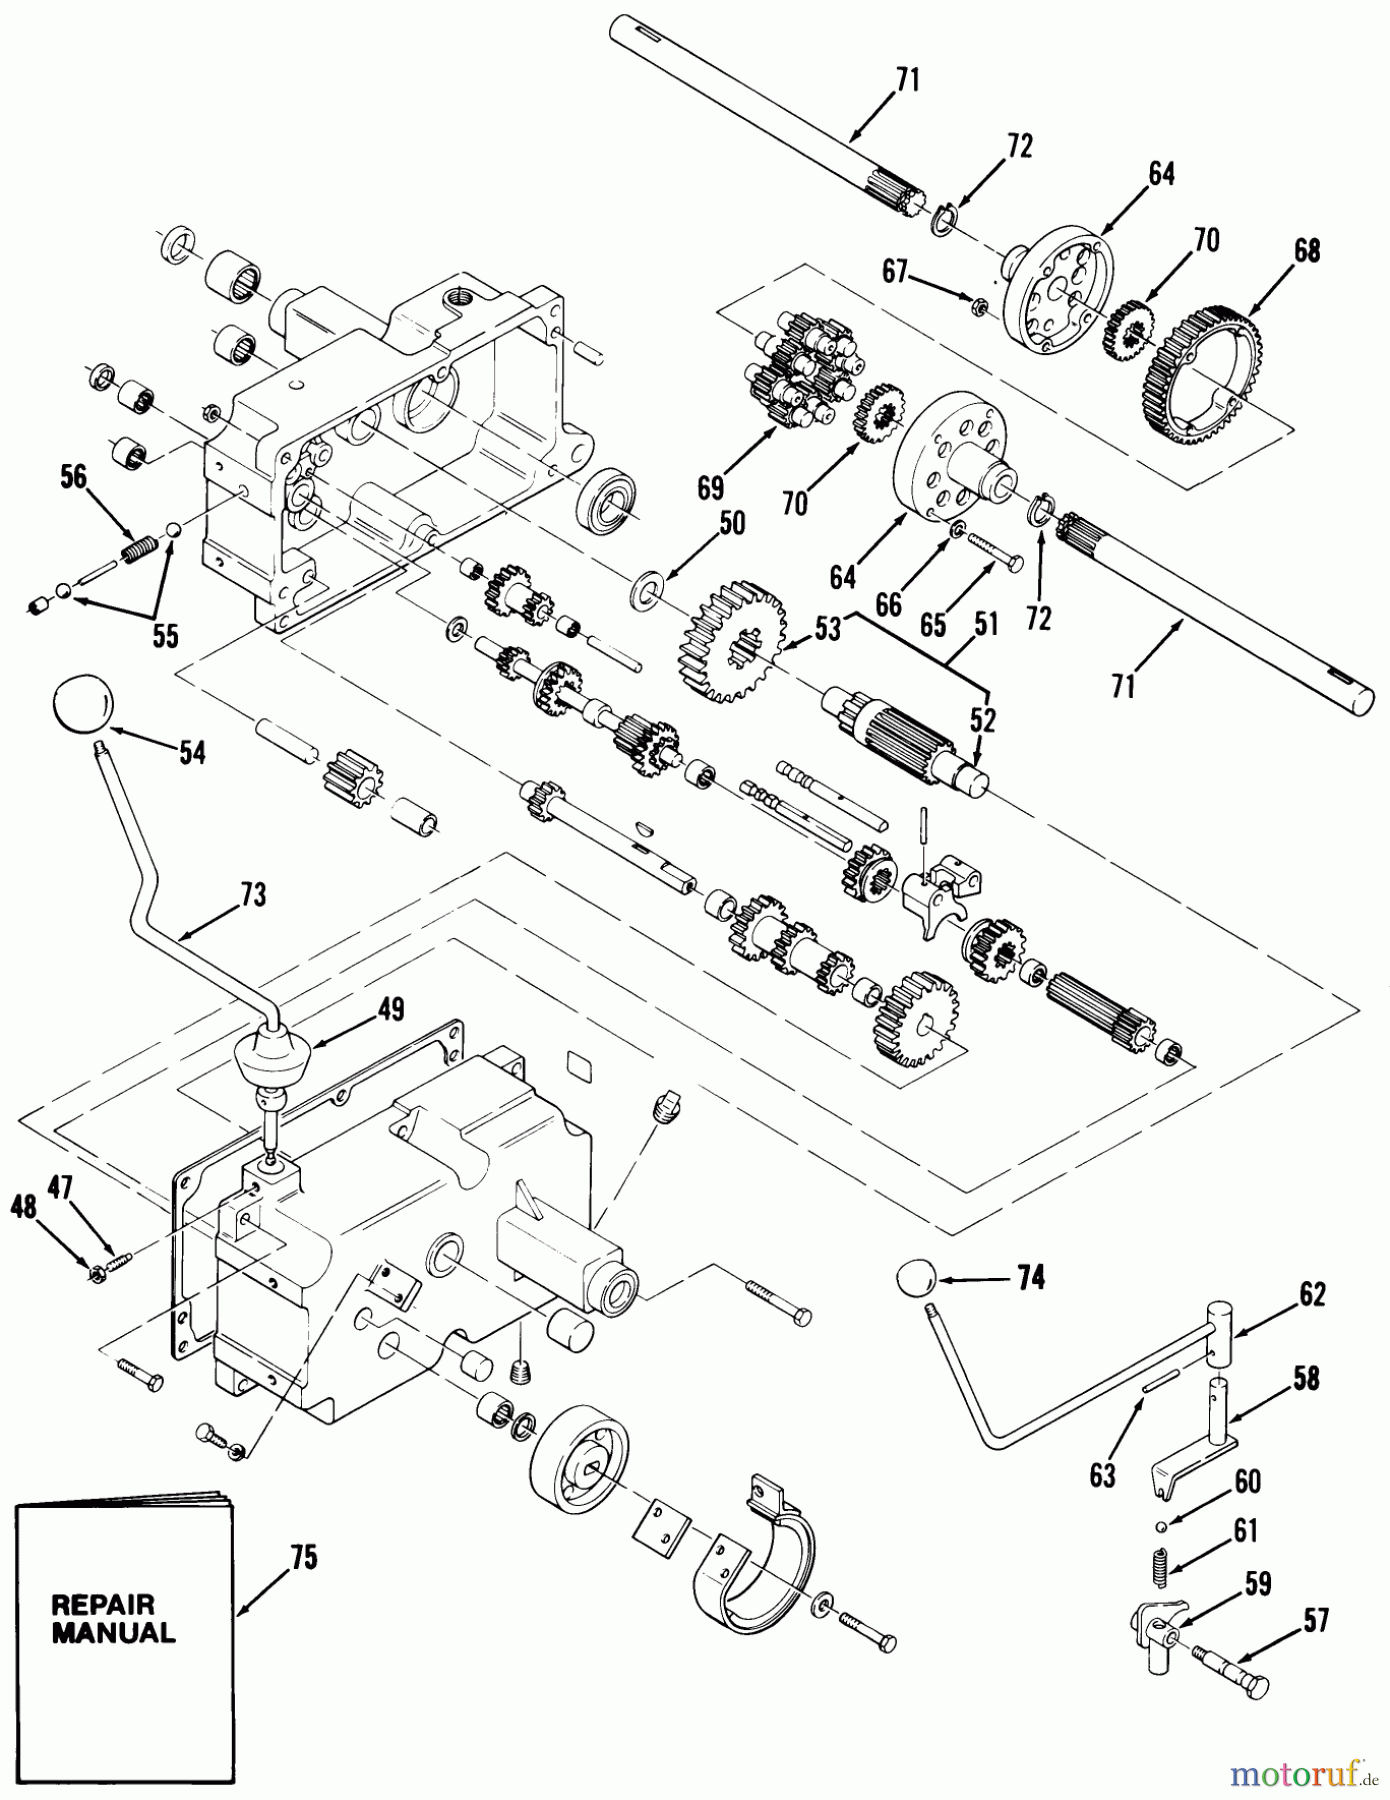  Toro Neu Mowers, Lawn & Garden Tractor Seite 1 01-14KE03 (C-145) - Toro C-145 Automatic Tractor, 1982 MECHANICAL TRANSMISSION-8 SPEED (CONT-D)